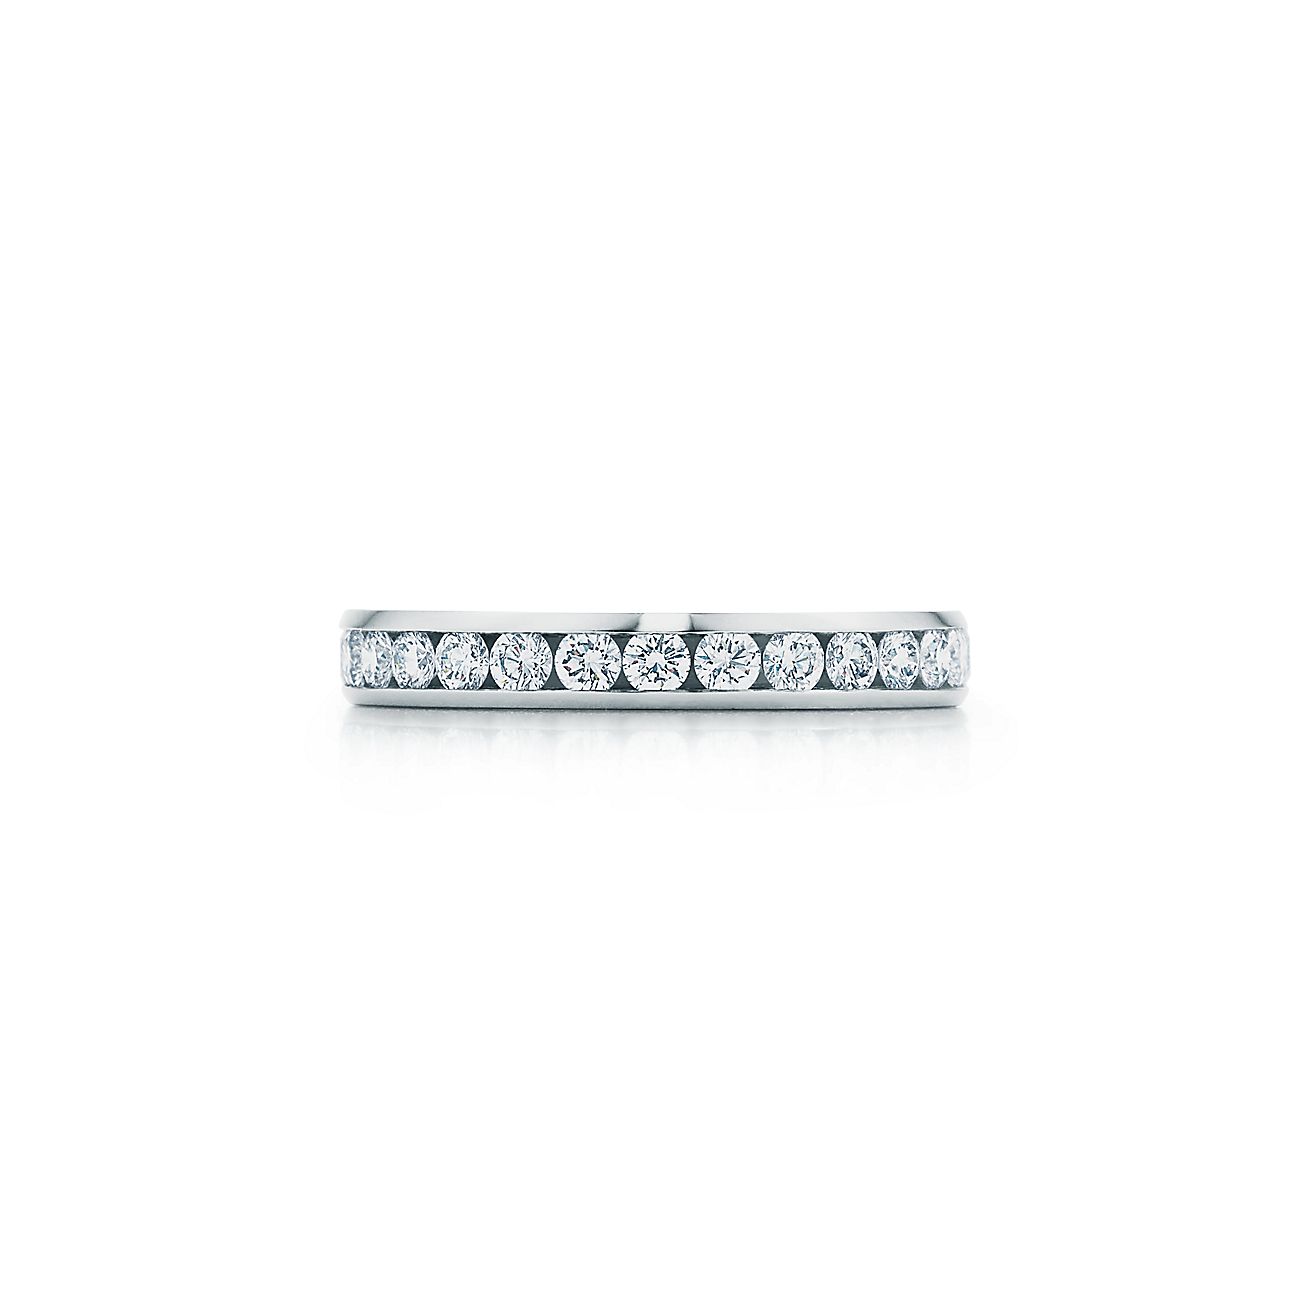 Vermomd Moederland Tweet Tiffany® Platinum Diamond Wedding Band | Tiffany & Co.